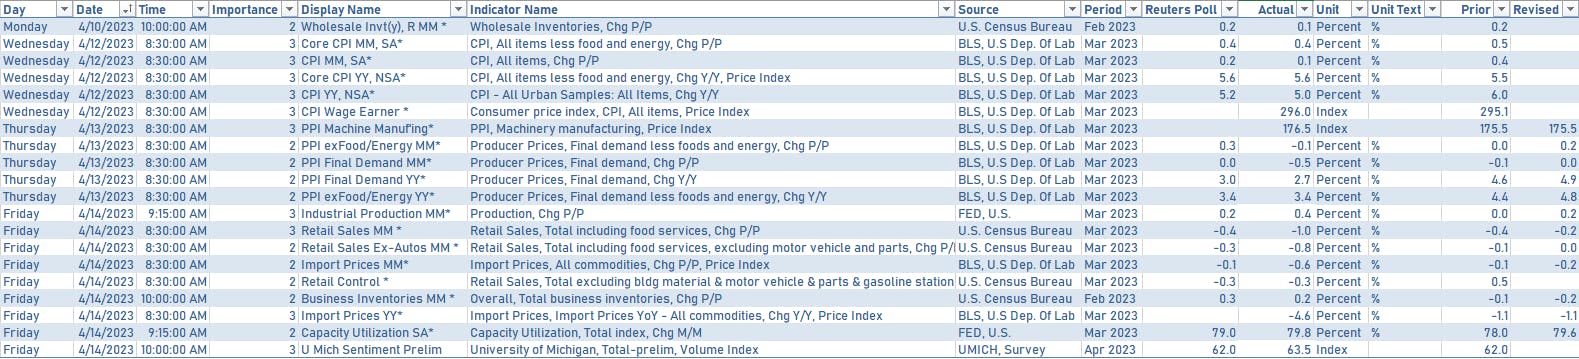 US Economic data over the past week | Sources: phipost.com, Refinitiv data